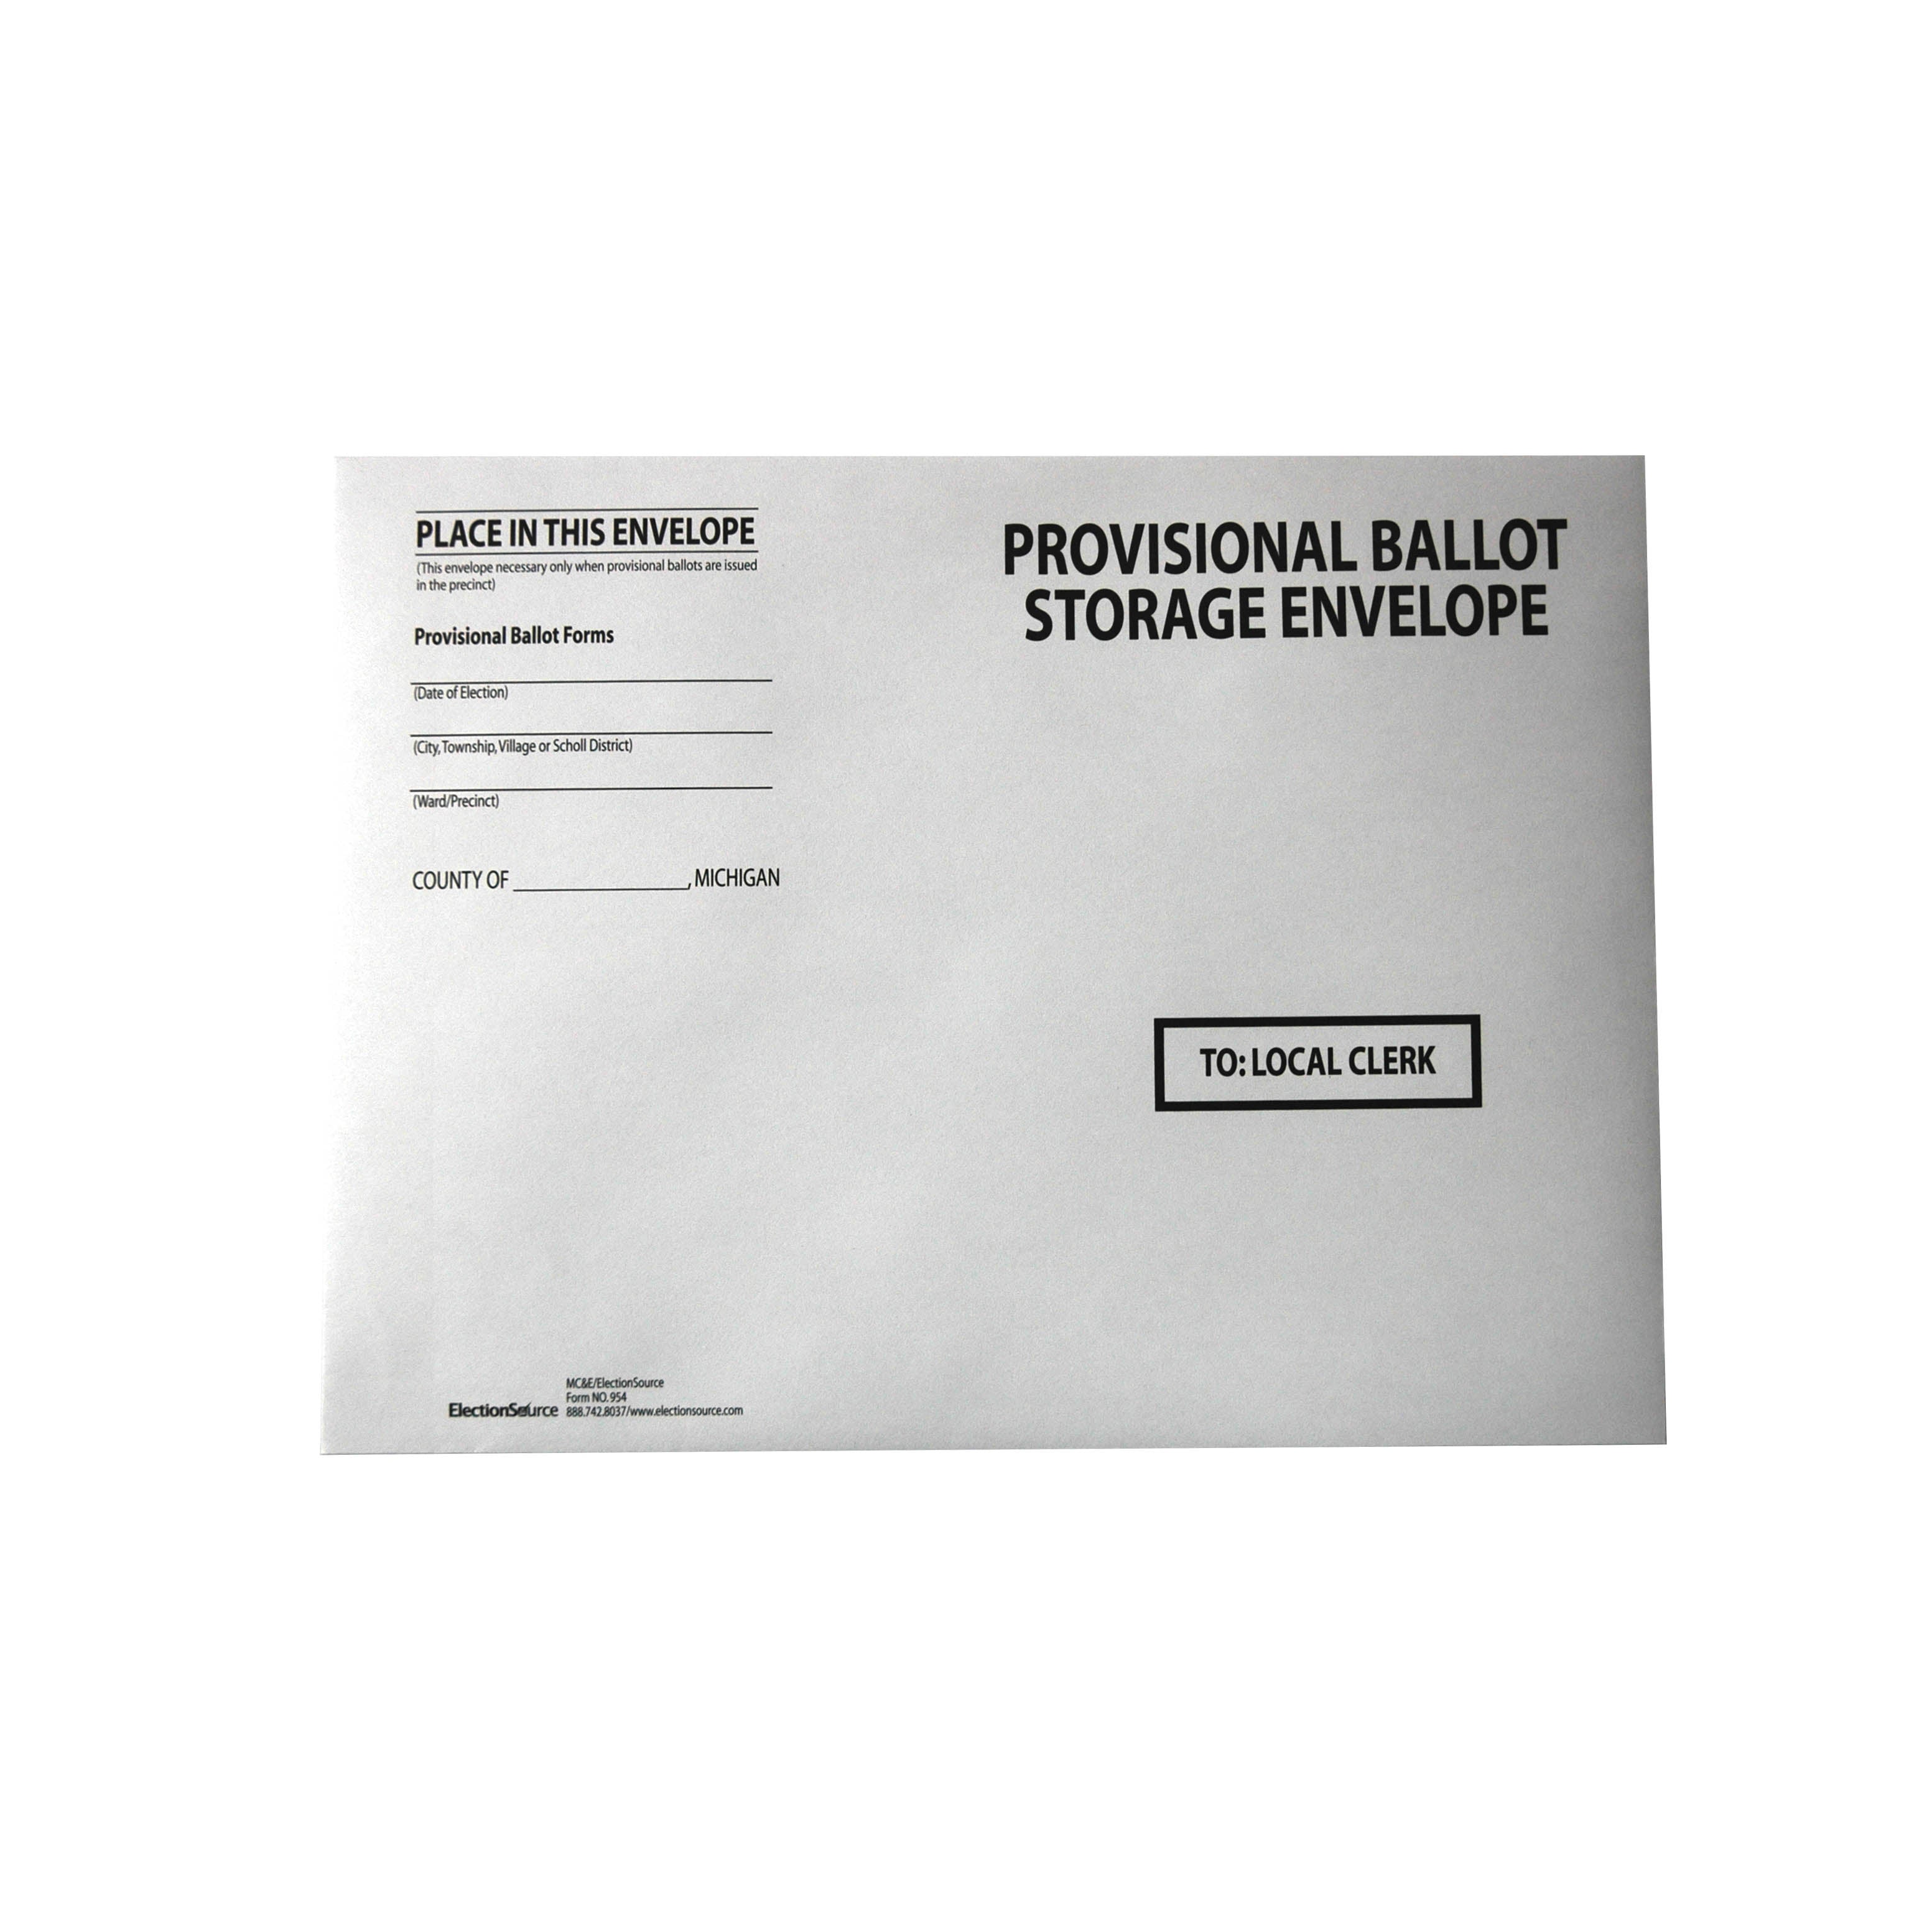 Provisional Ballot Storage Envelope